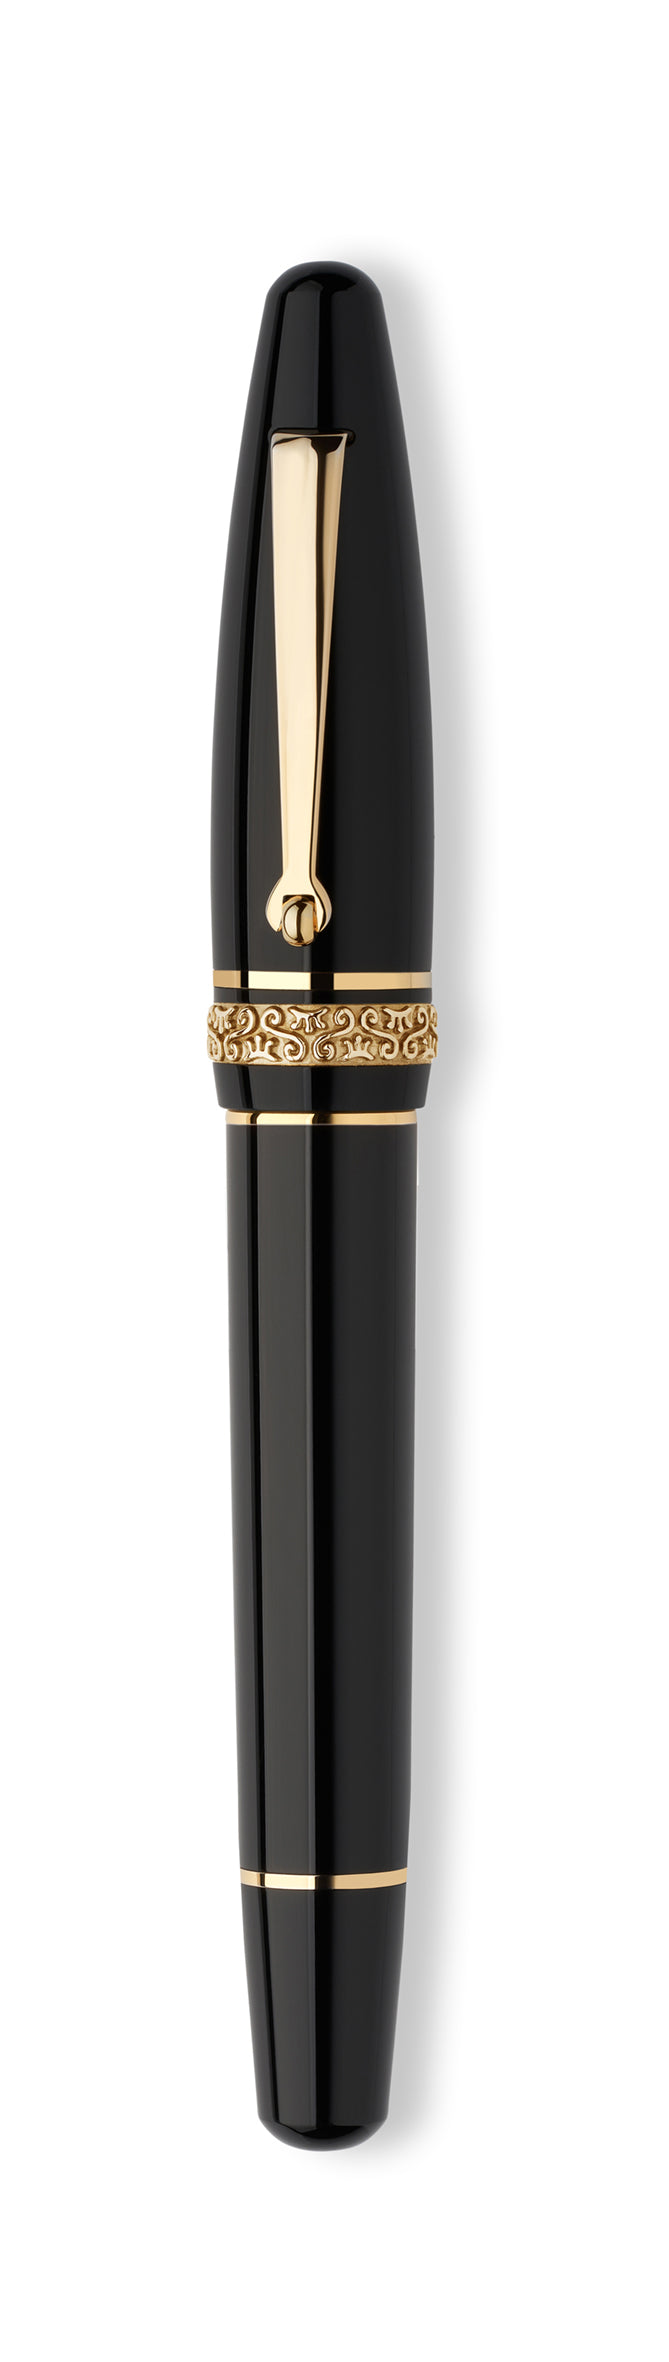 Maiora Ultra Ogiva Golden Age 2.0 Nera GT Fountain Pen